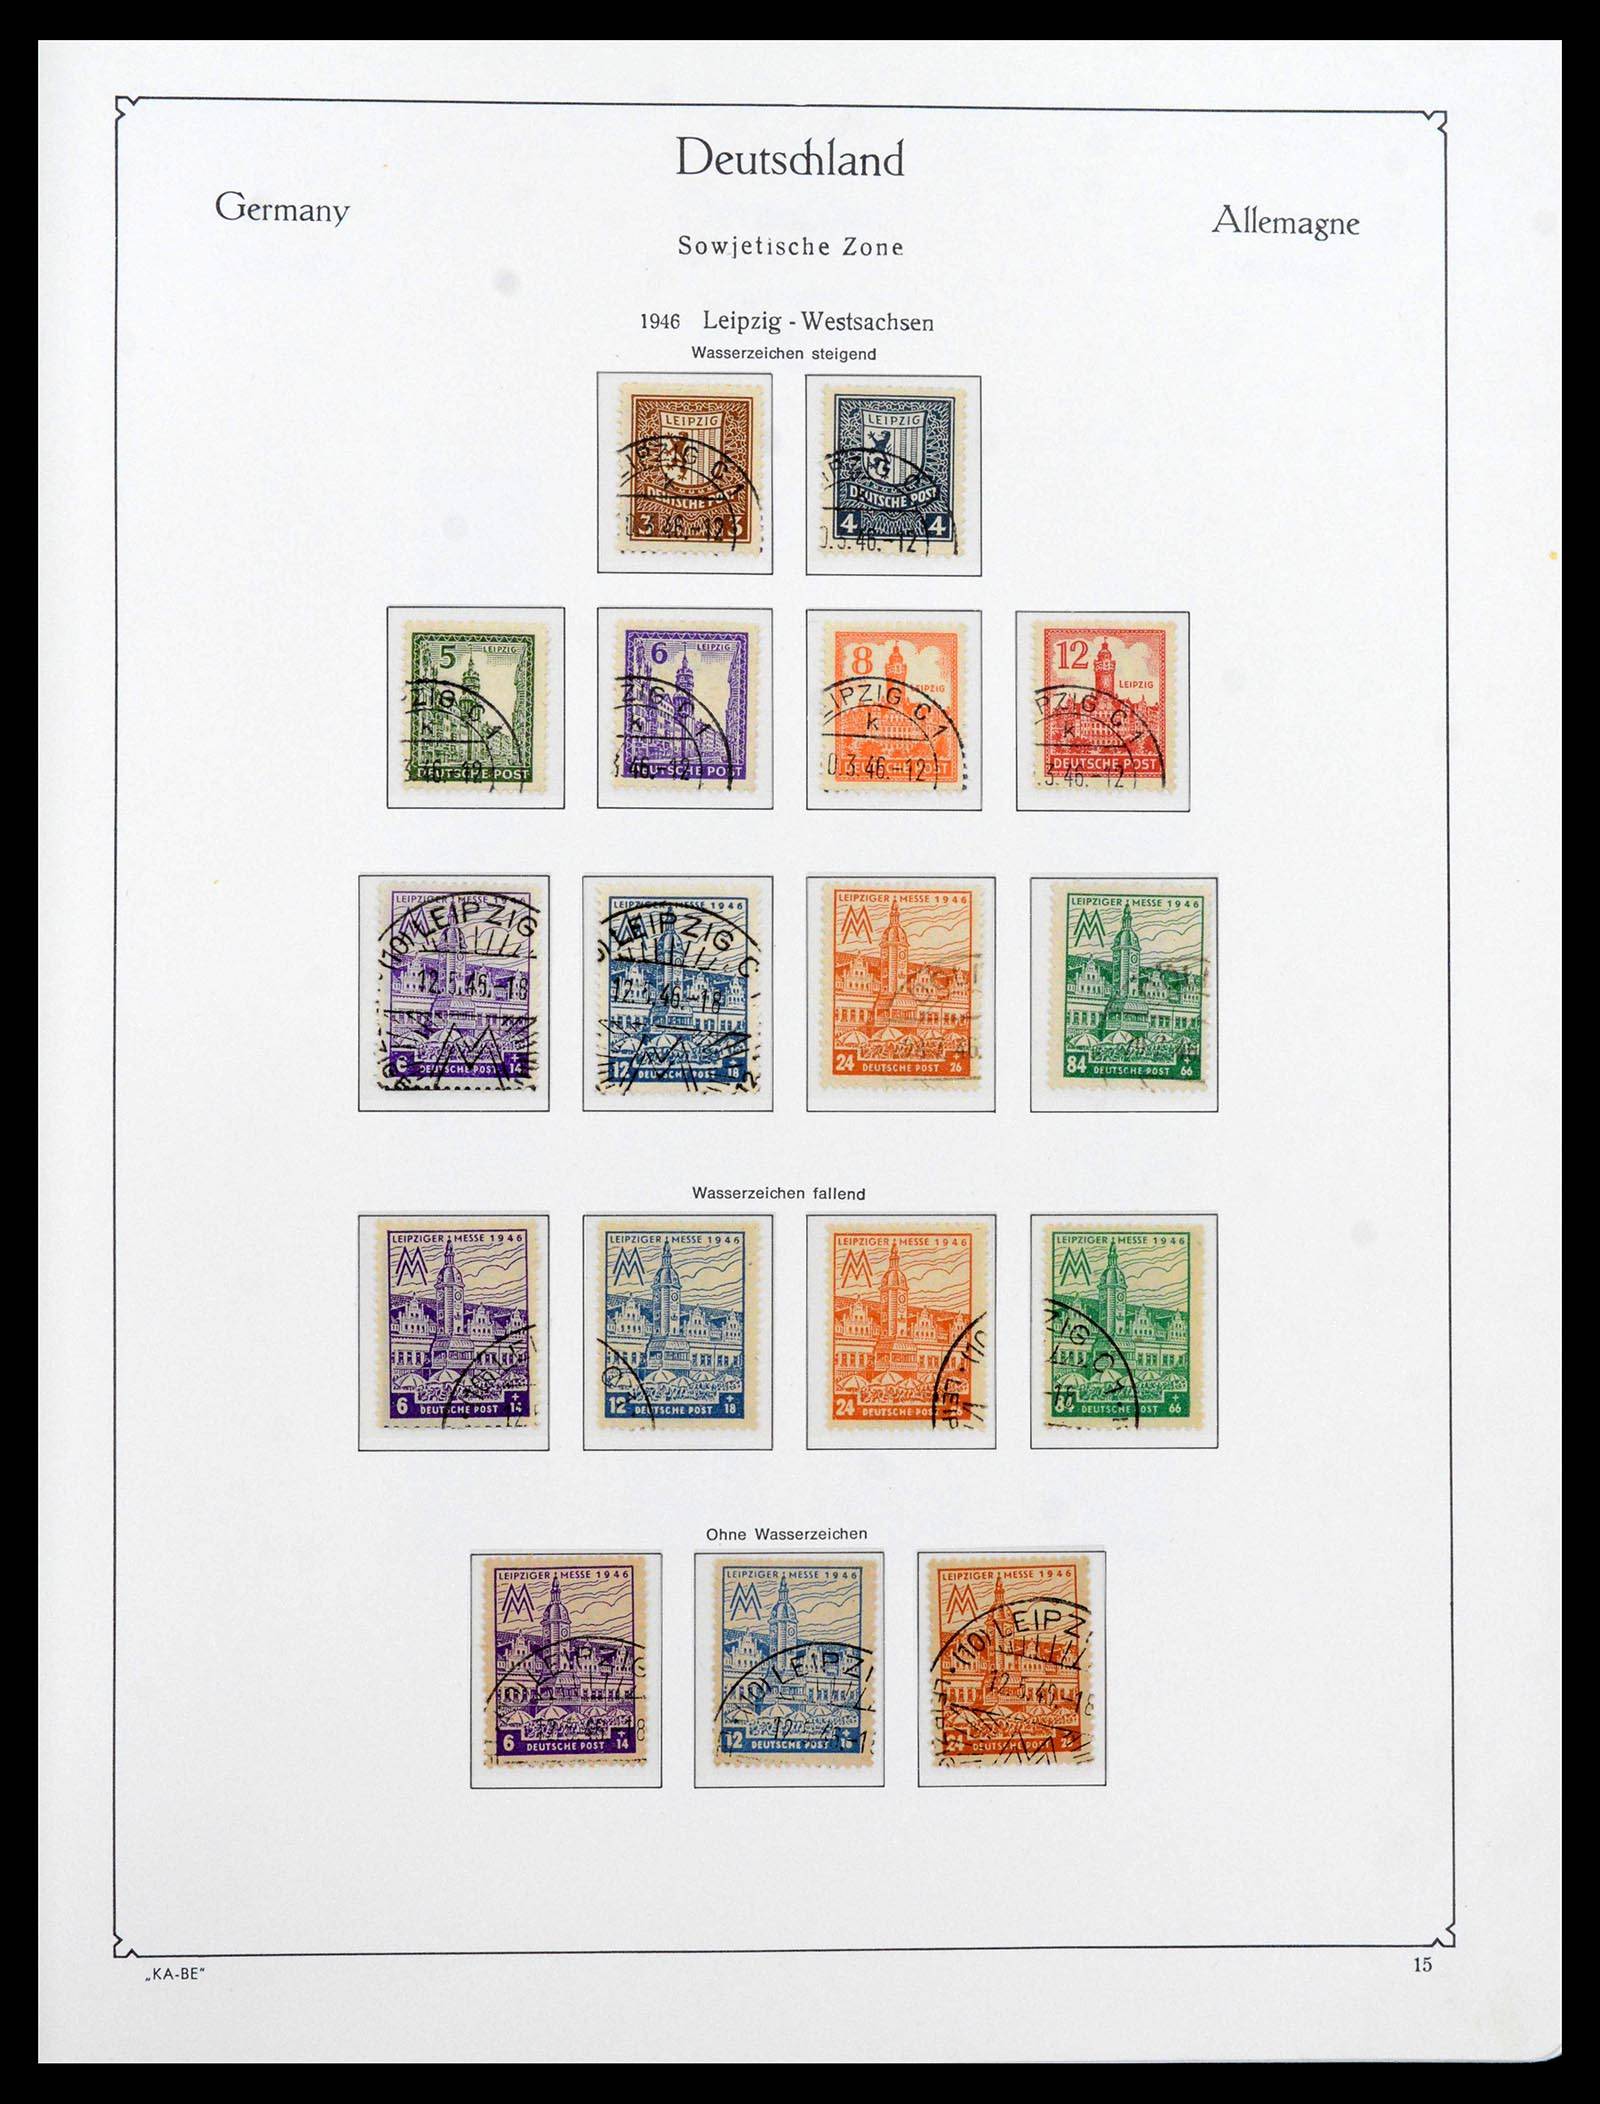 39377 0019 - Stamp collection 39377 Soviet Zone 1945-1948.